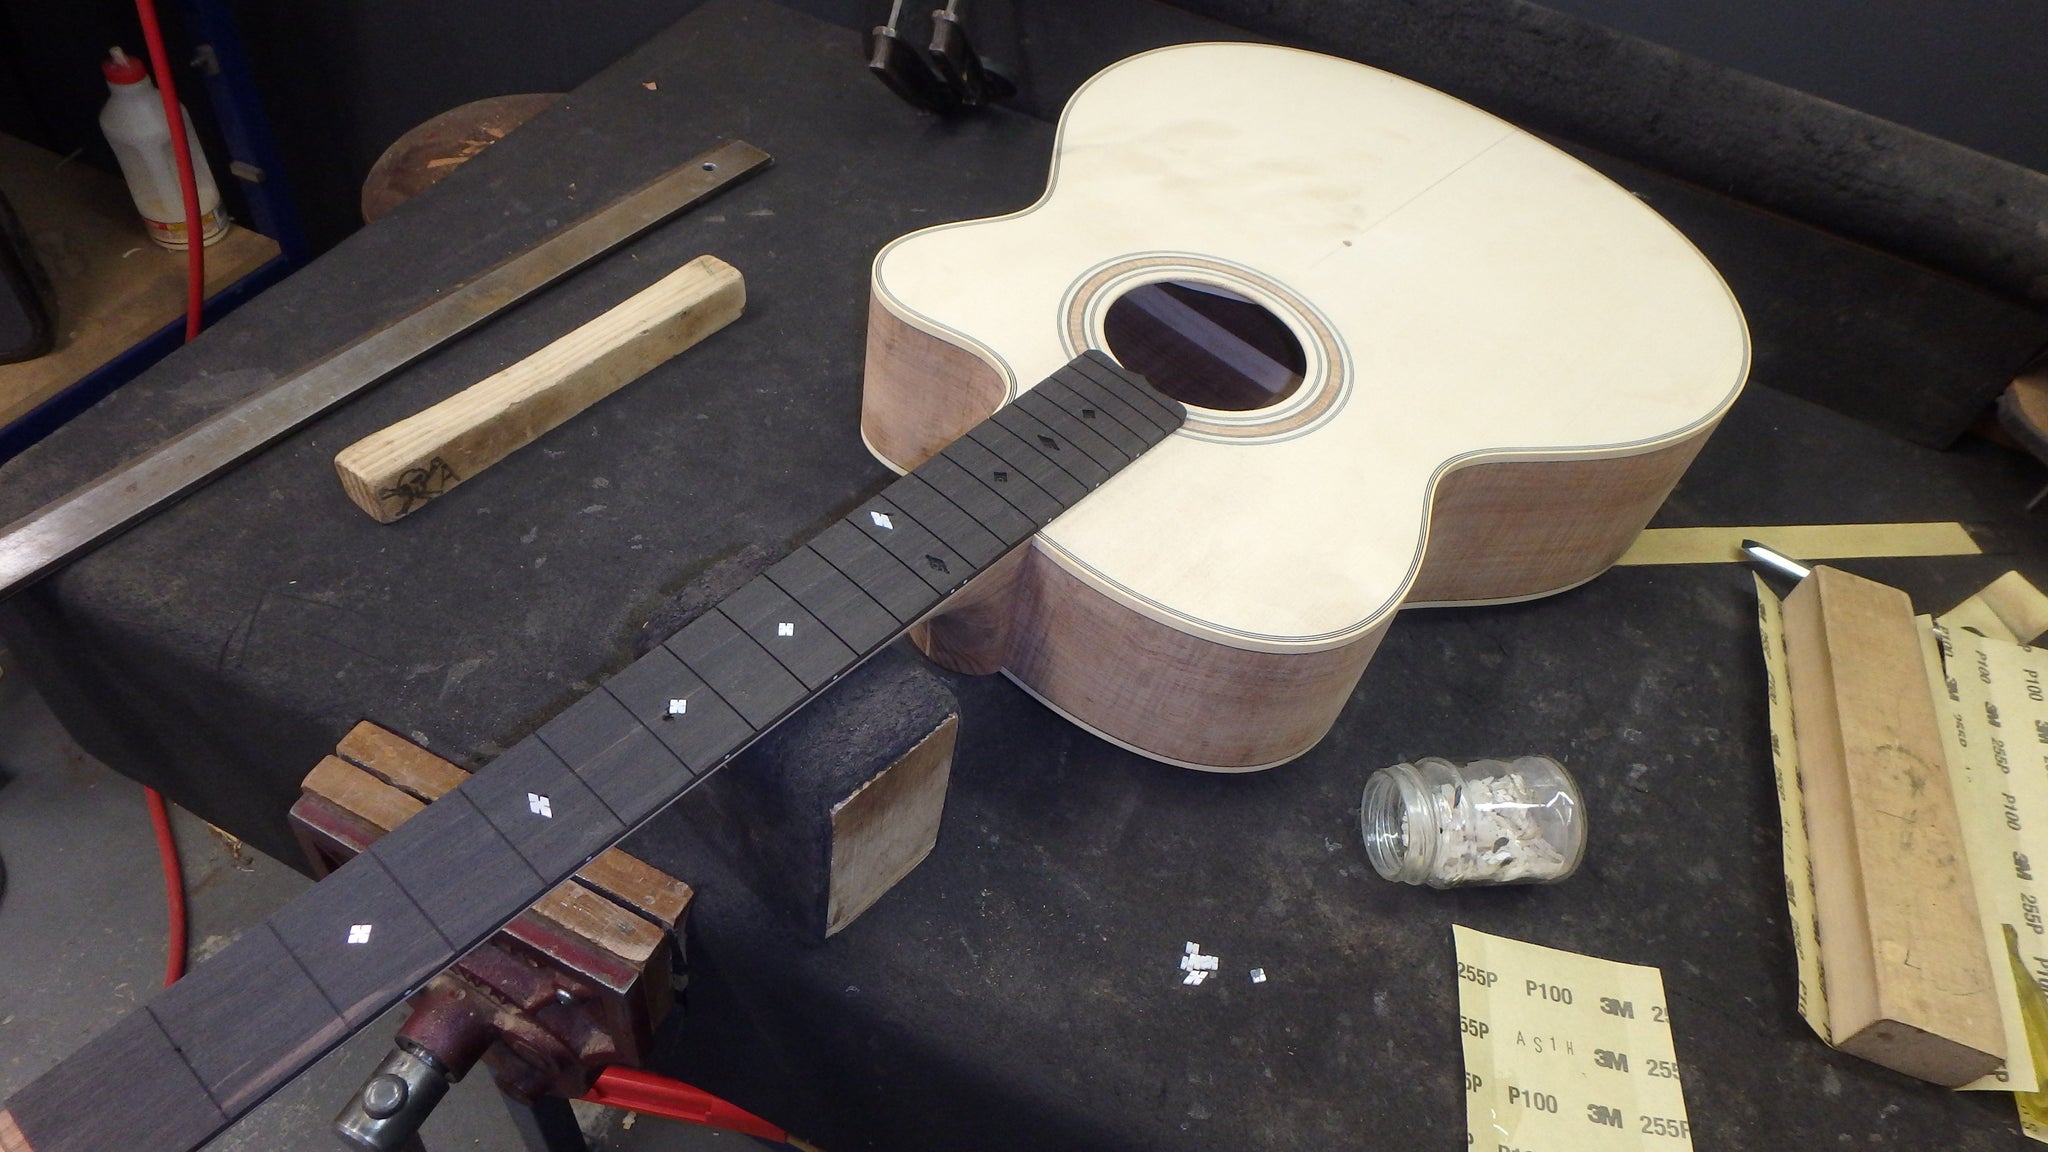 Maton Custom Shop Jumbo Guitar Cutaway with Sitka Spruce and Fiddleback Blackwood ID-11065 - Artisan Guitars